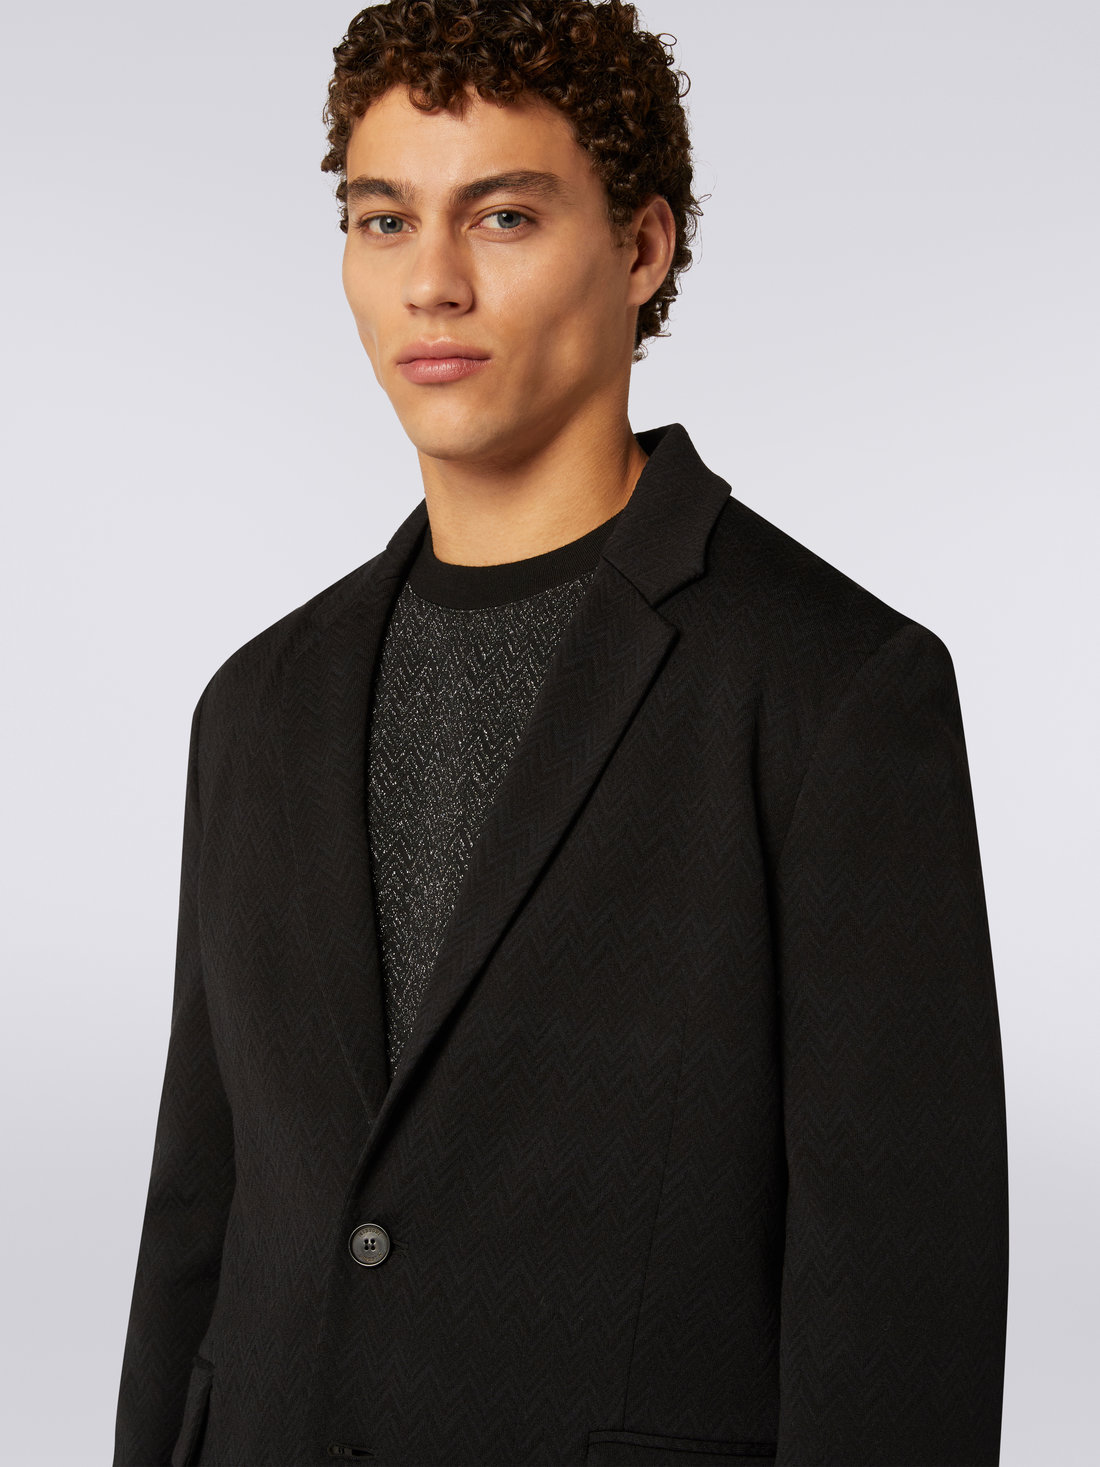 Wool blend jacket with chevron pattern, Black    - US23WF05BT005U93911 - 4